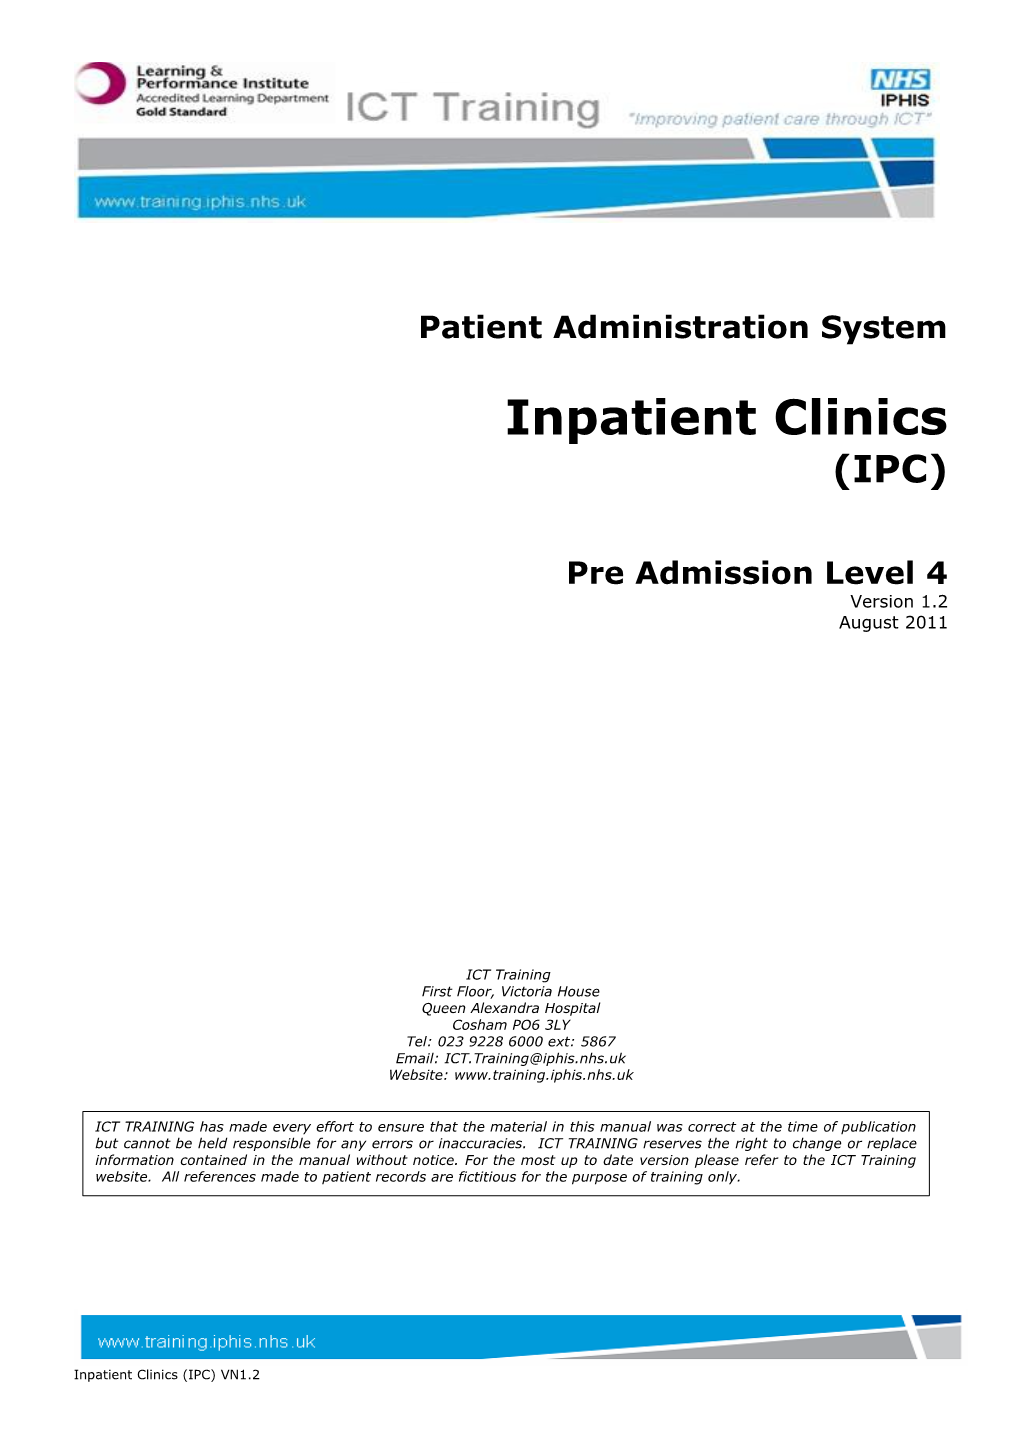 Patient Master Index